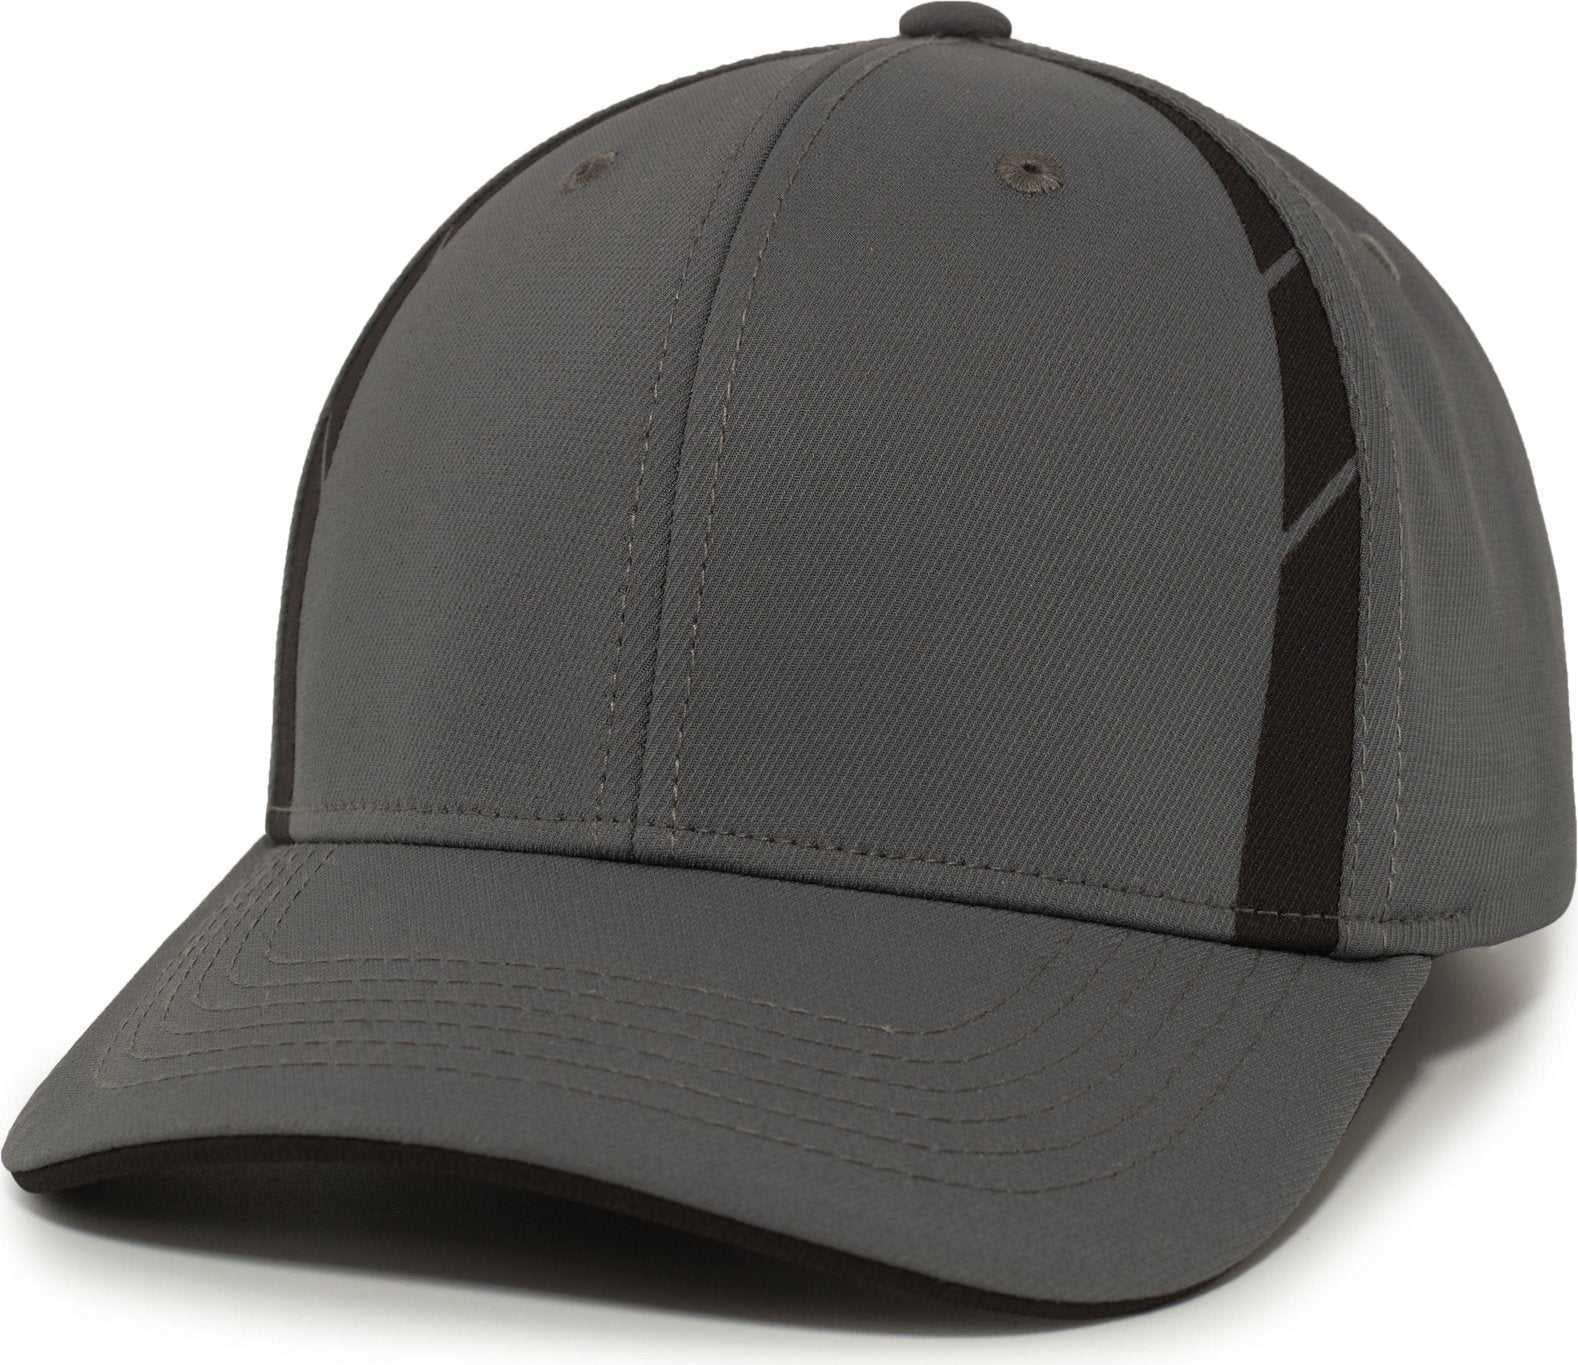 Pacific Headwear P303 Coolcore Sideline Snapback Cap - Graphite Black - HIT a Double